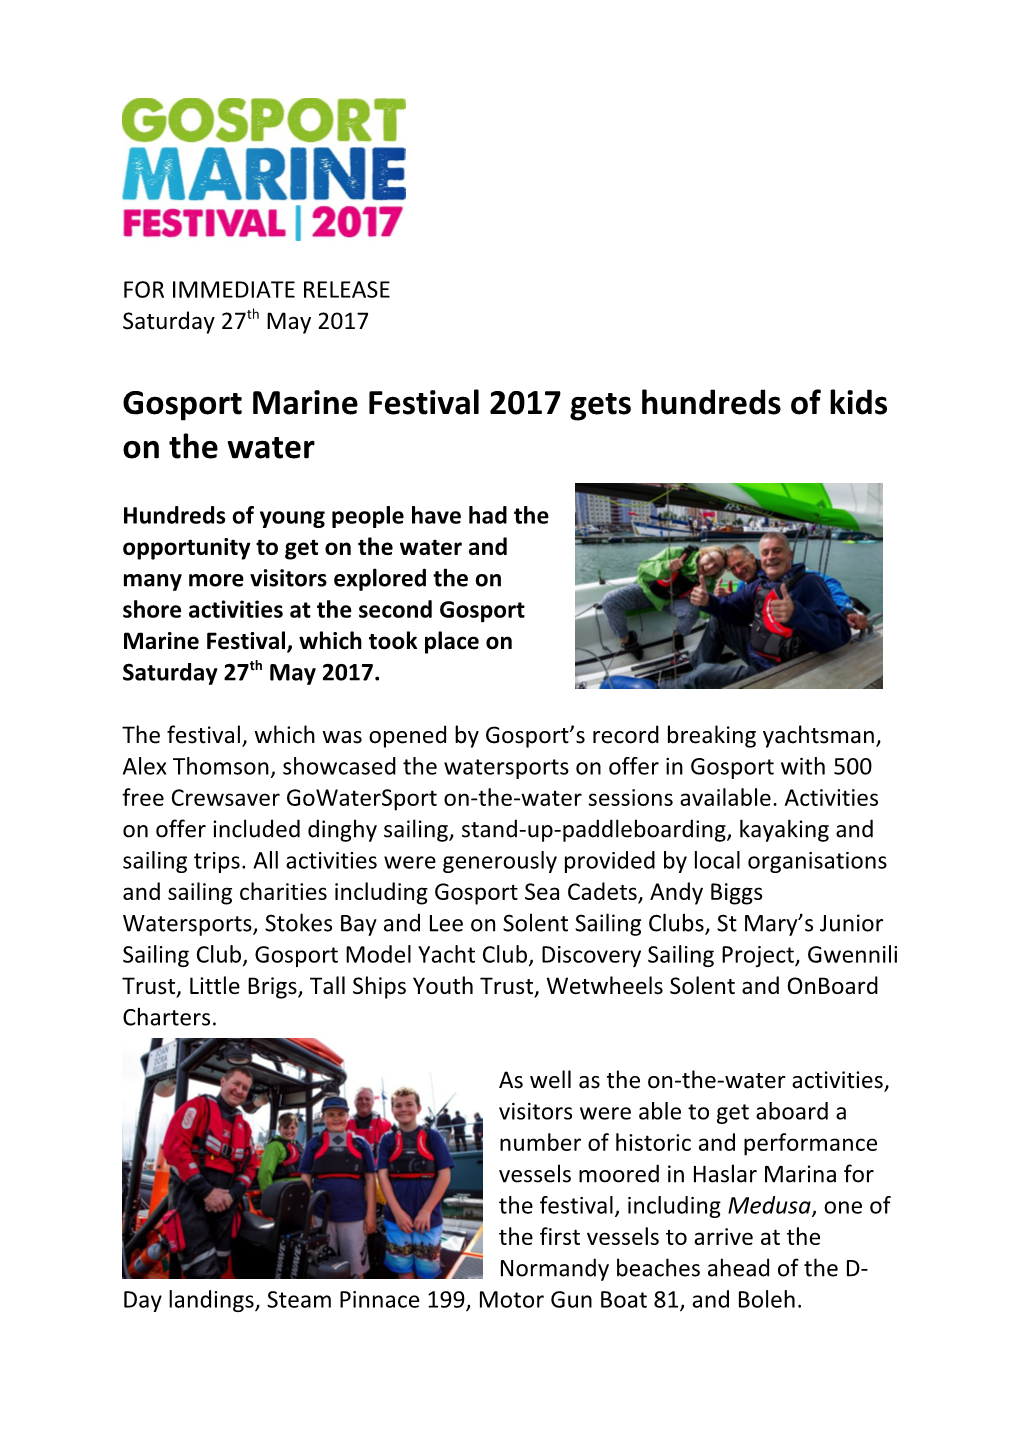 Gosport Marine Festival 2017 Gets Hundreds of Kids on the Water